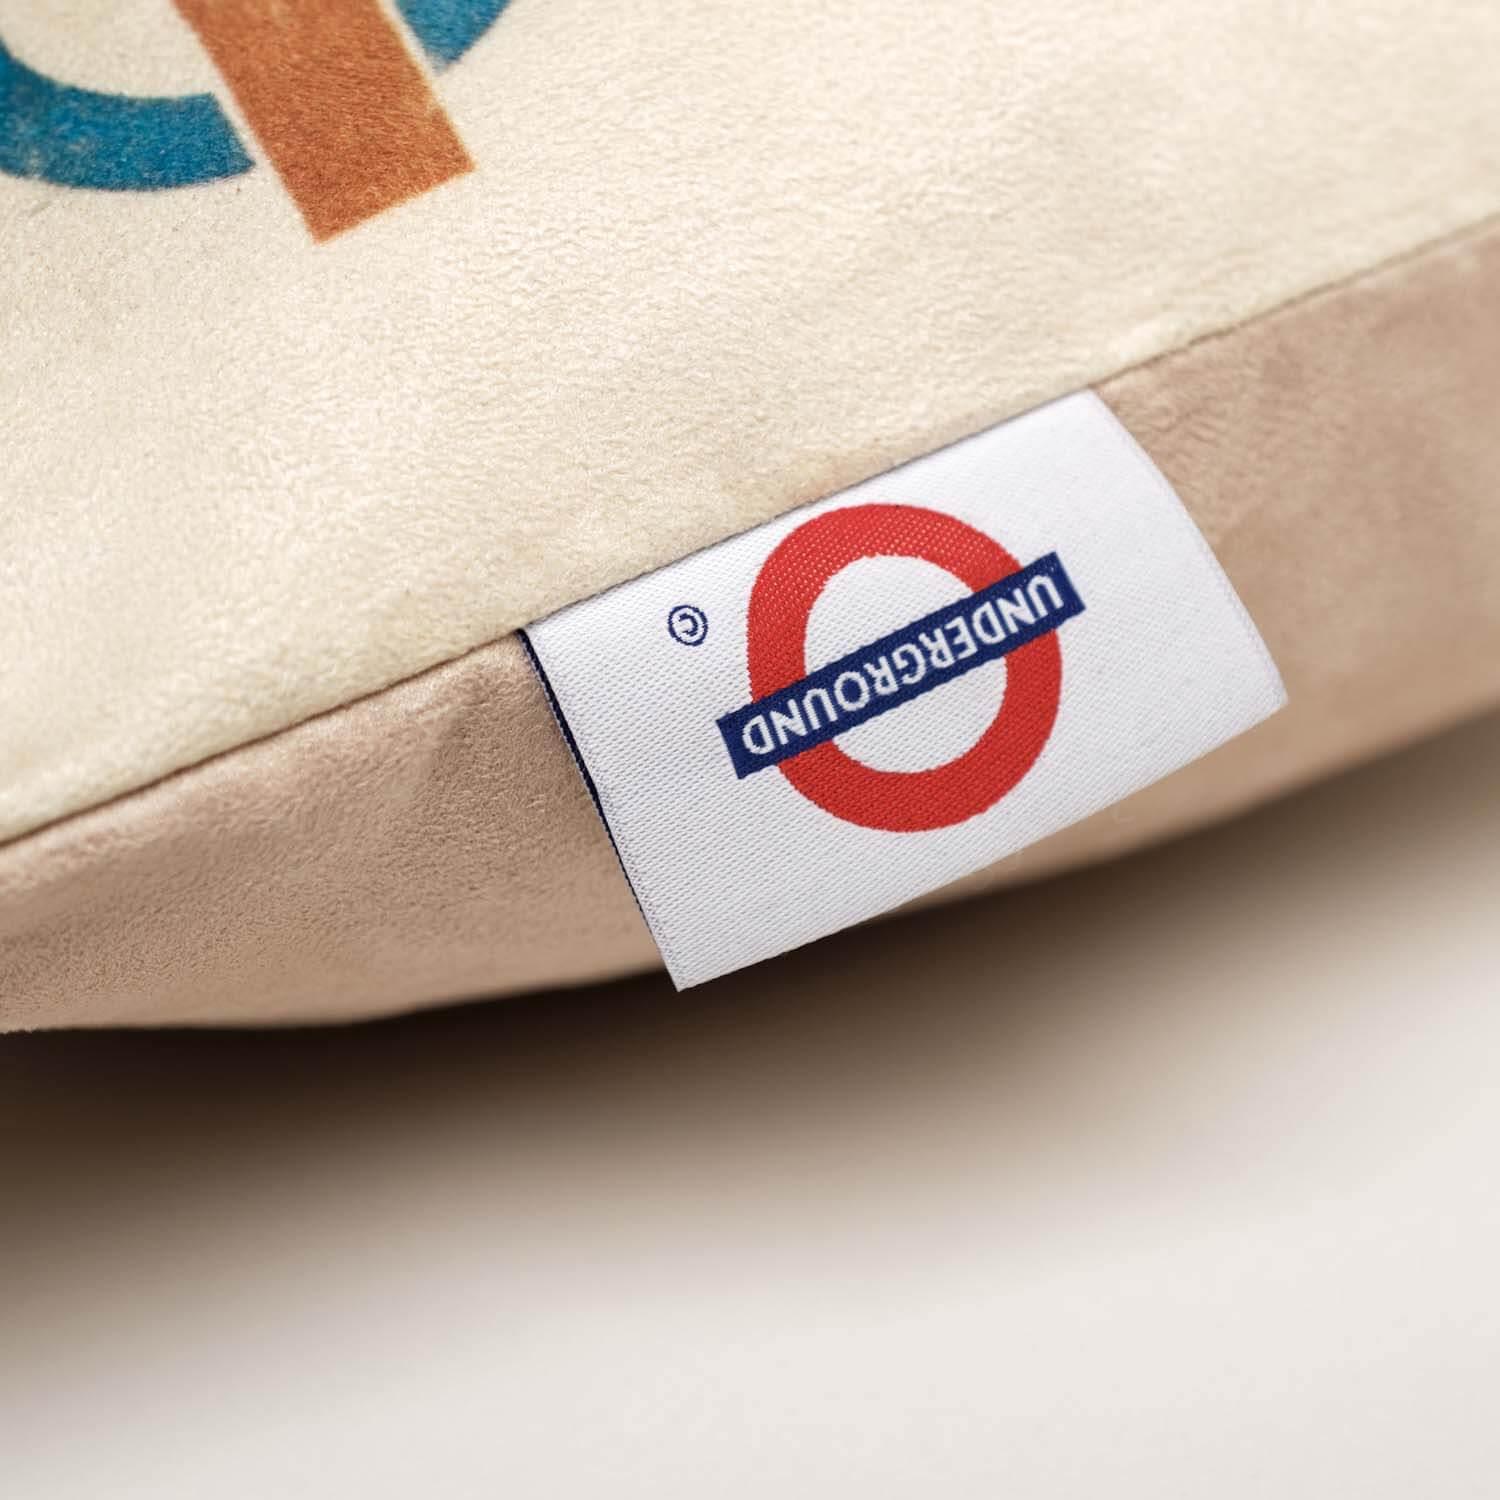 Palm House - London Transport Cushion - Handmade Cushions UK - WeLoveCushions